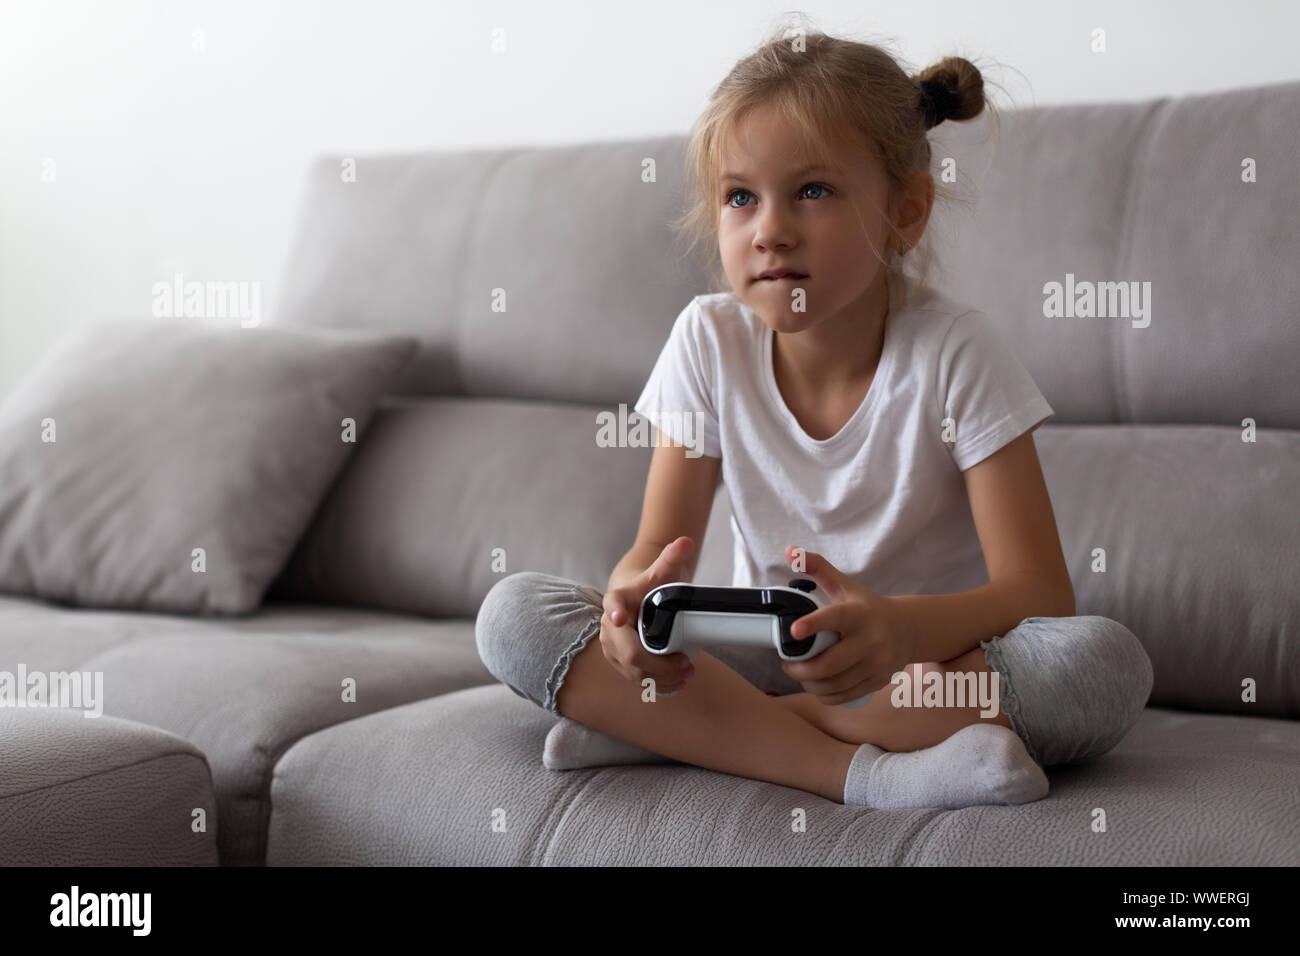 little girl video games